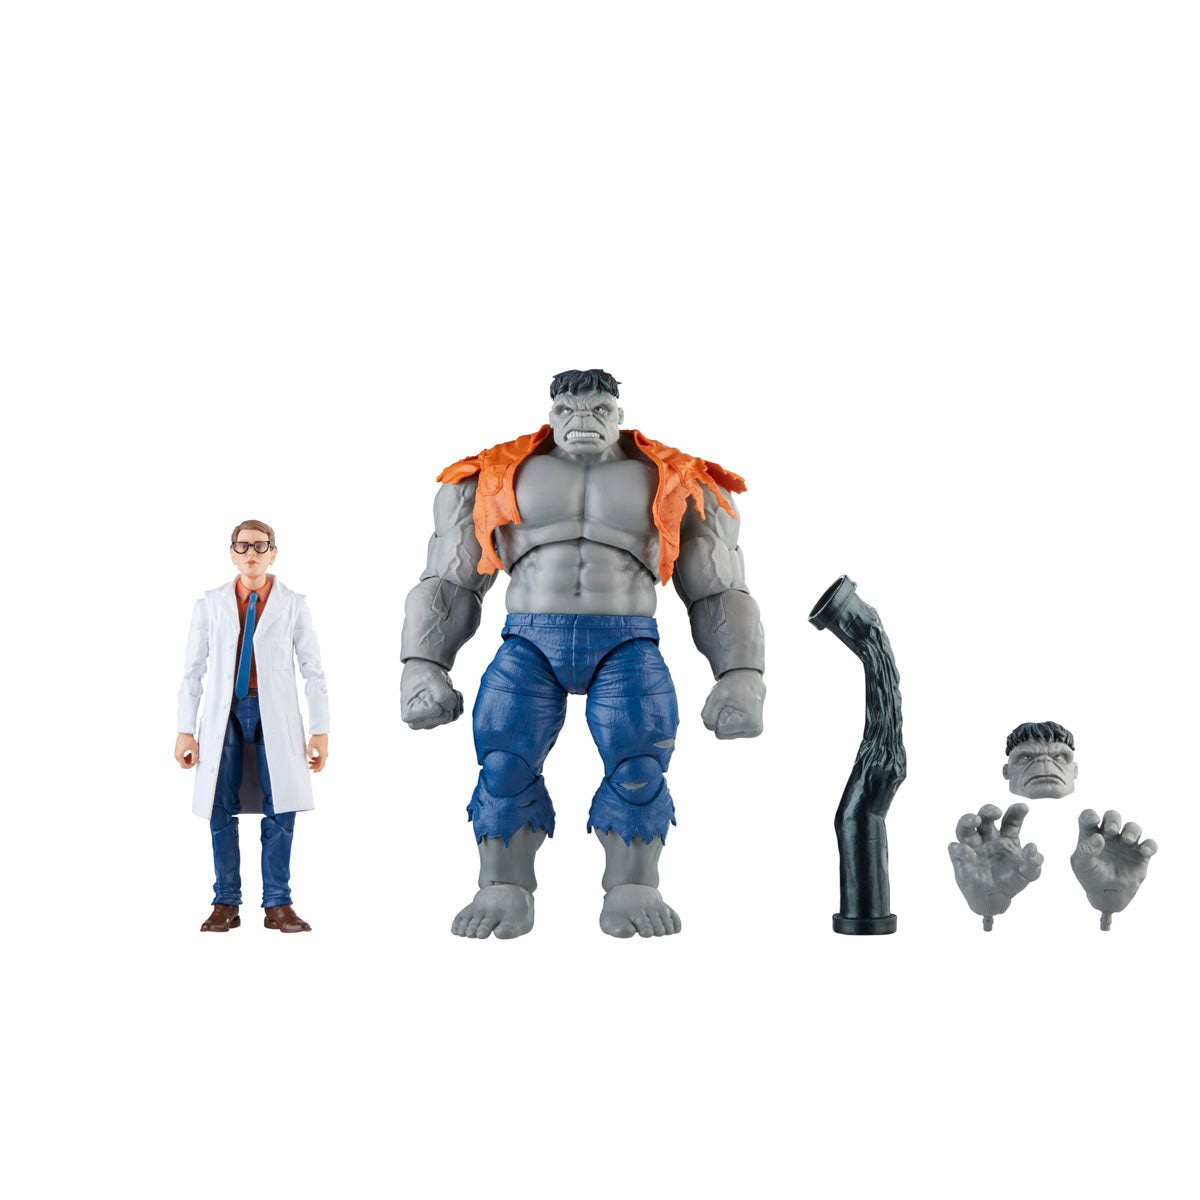 Avengers 60th Anniversary Marvel Legends Gray Hulk and Dr. Bruce Banner Hasbro